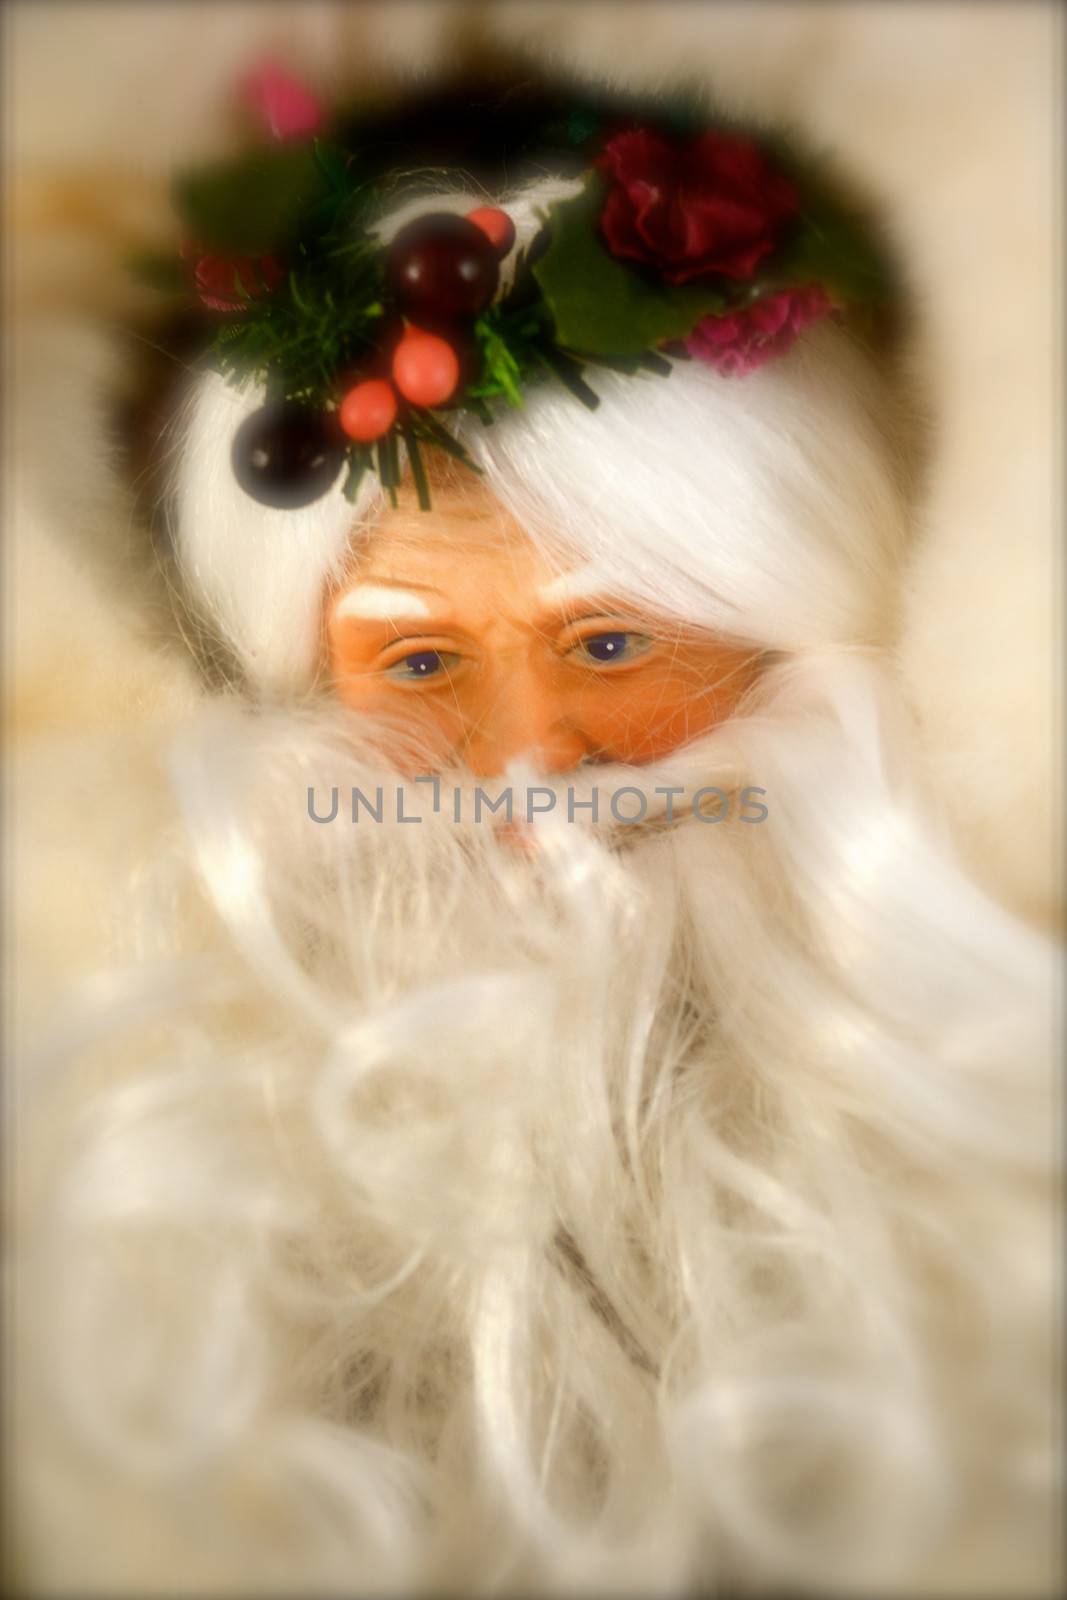 Santa Claus Face by RefocusPhoto